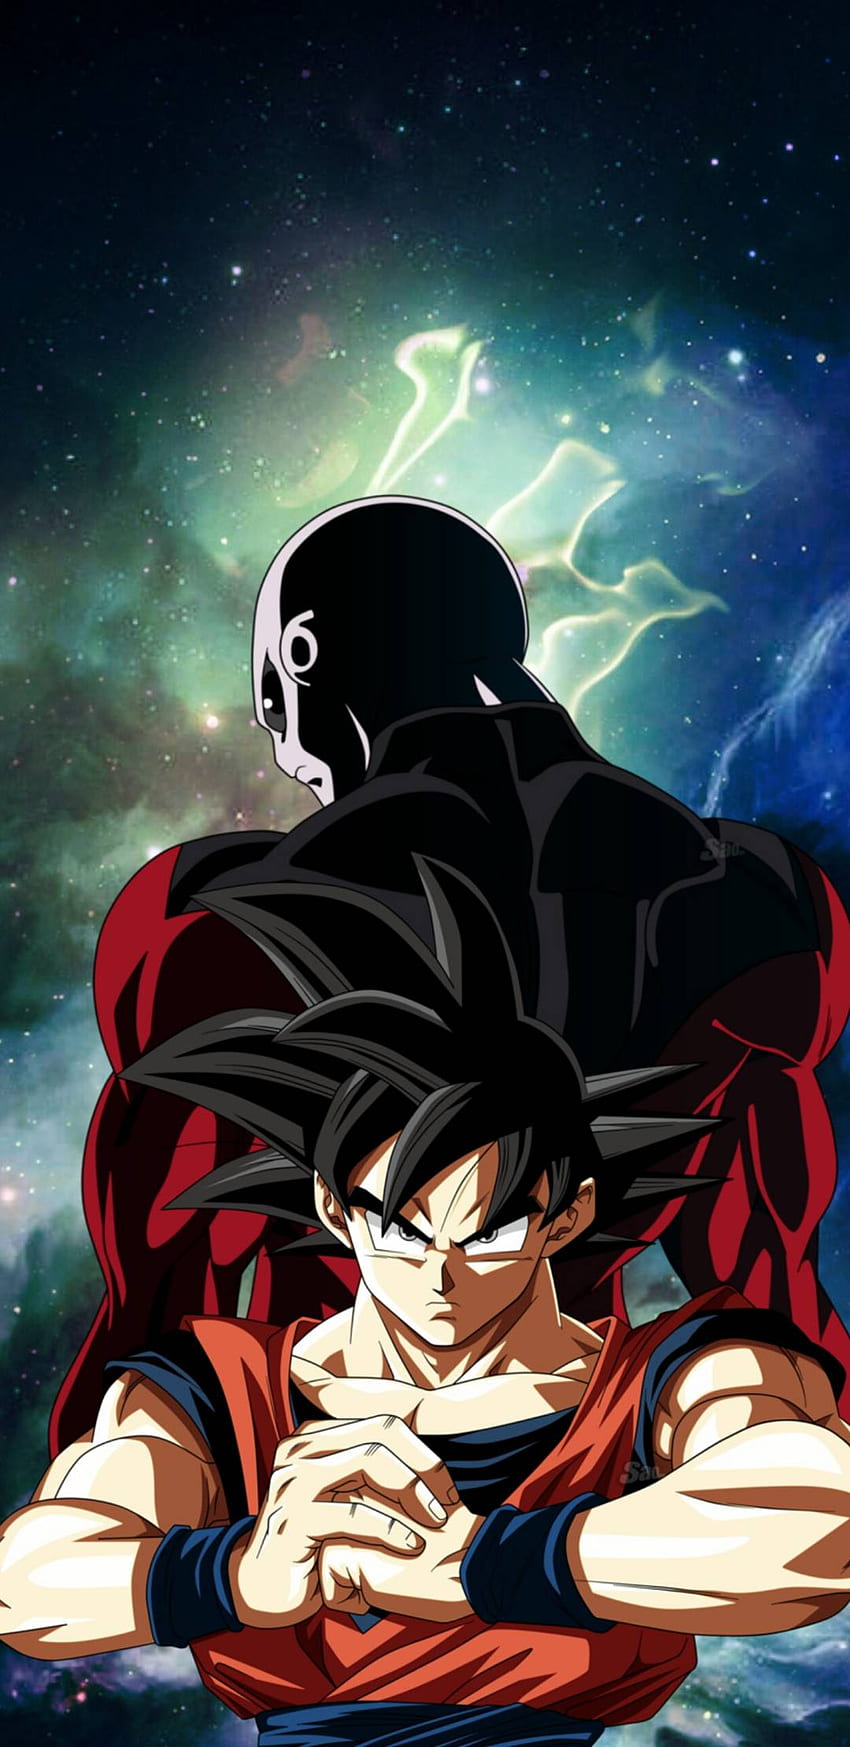 Super Saiyan Goku Dragon Ball Z Movie 7 The Return of Cooler Android  2K wallpaper download